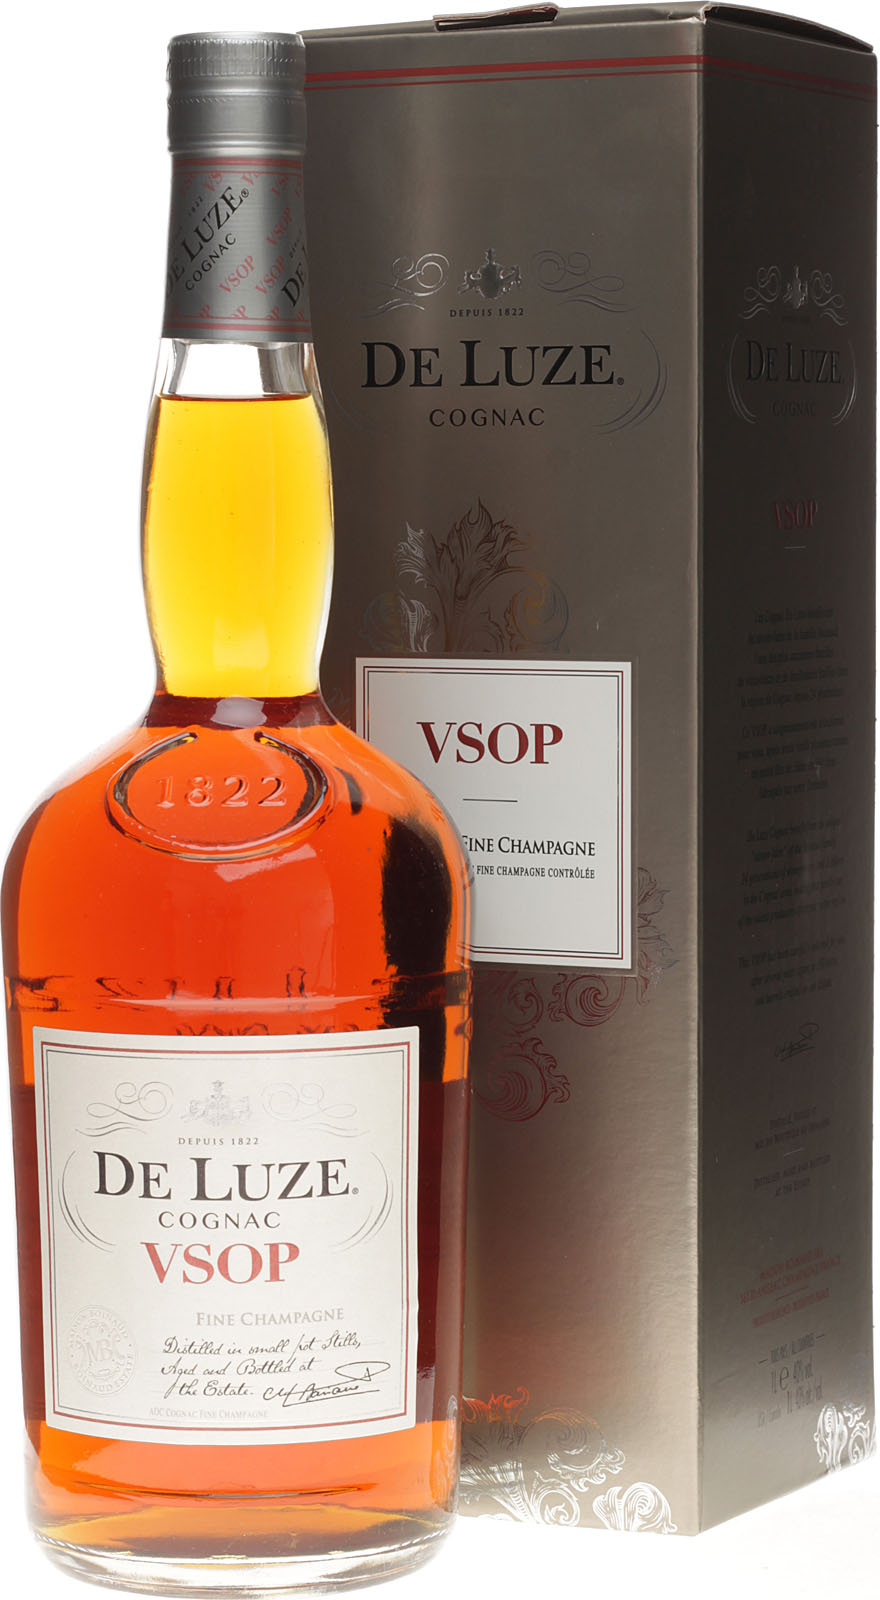 De Luze VSOP Cognac - 1,0 Liter Flasche Premium Cognac